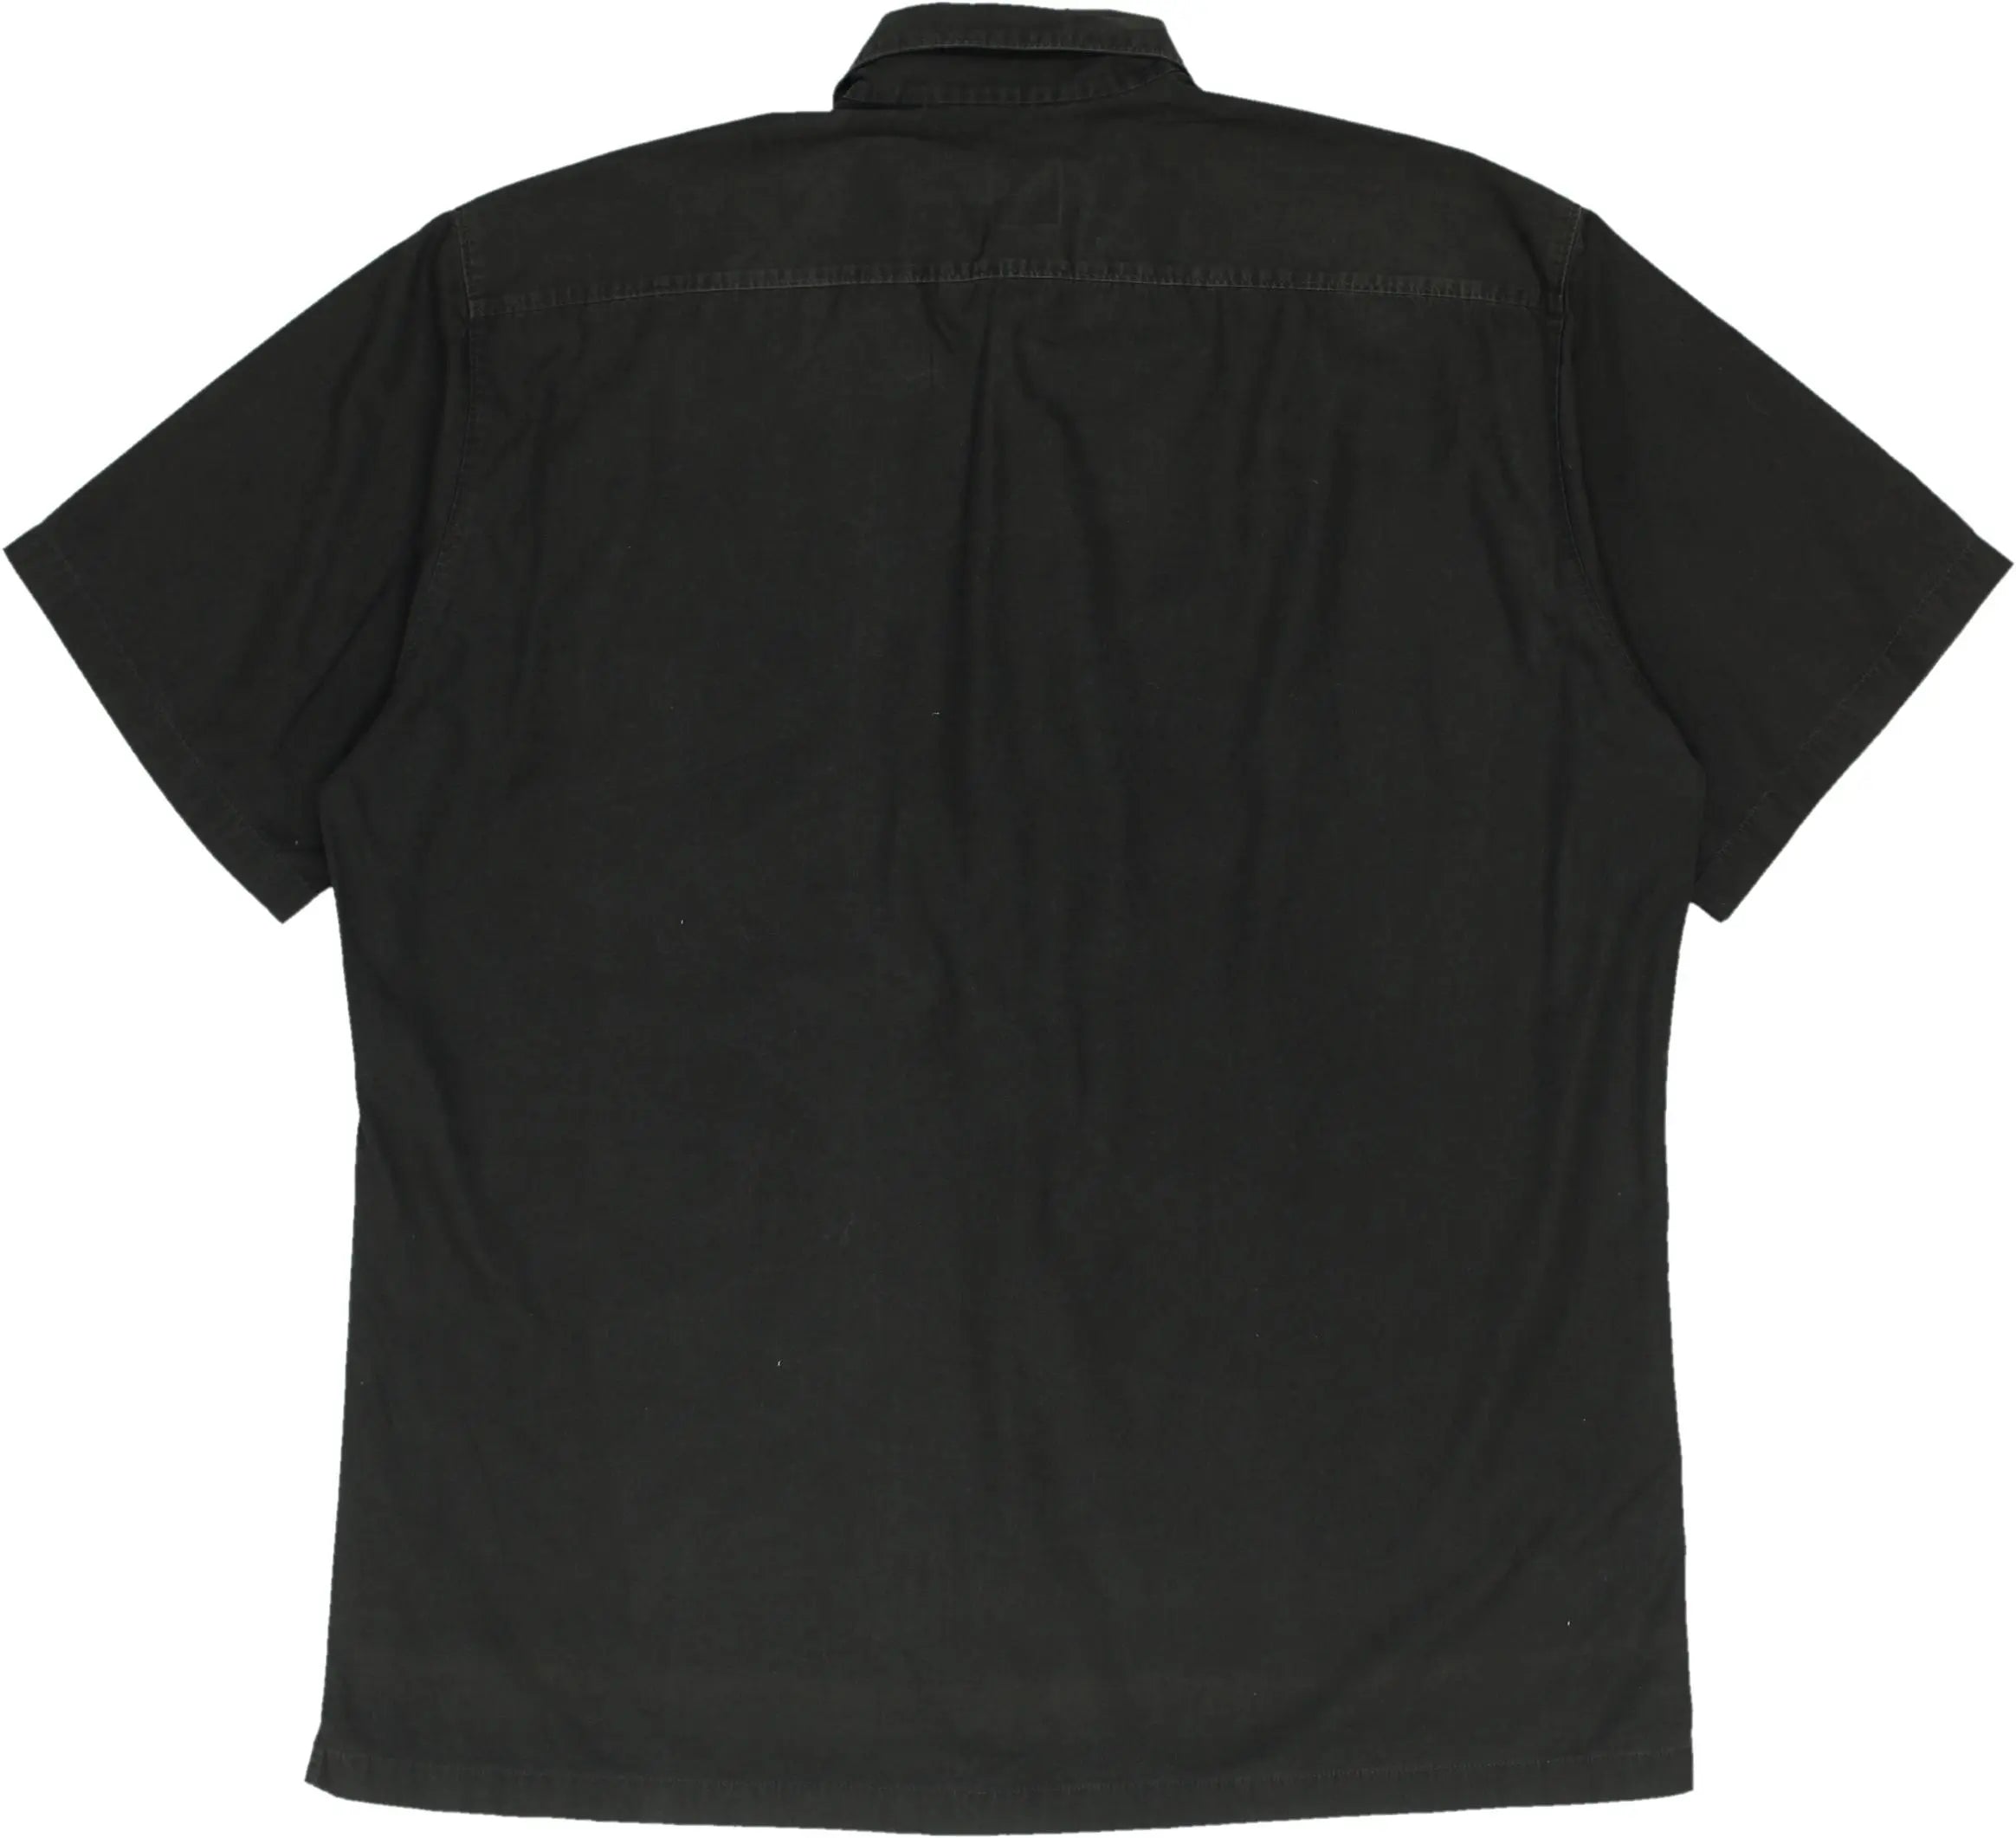 Hugo Boss - Black Short Sleeve Shirt by Hugo Boss- ThriftTale.com - Vintage and second handclothing